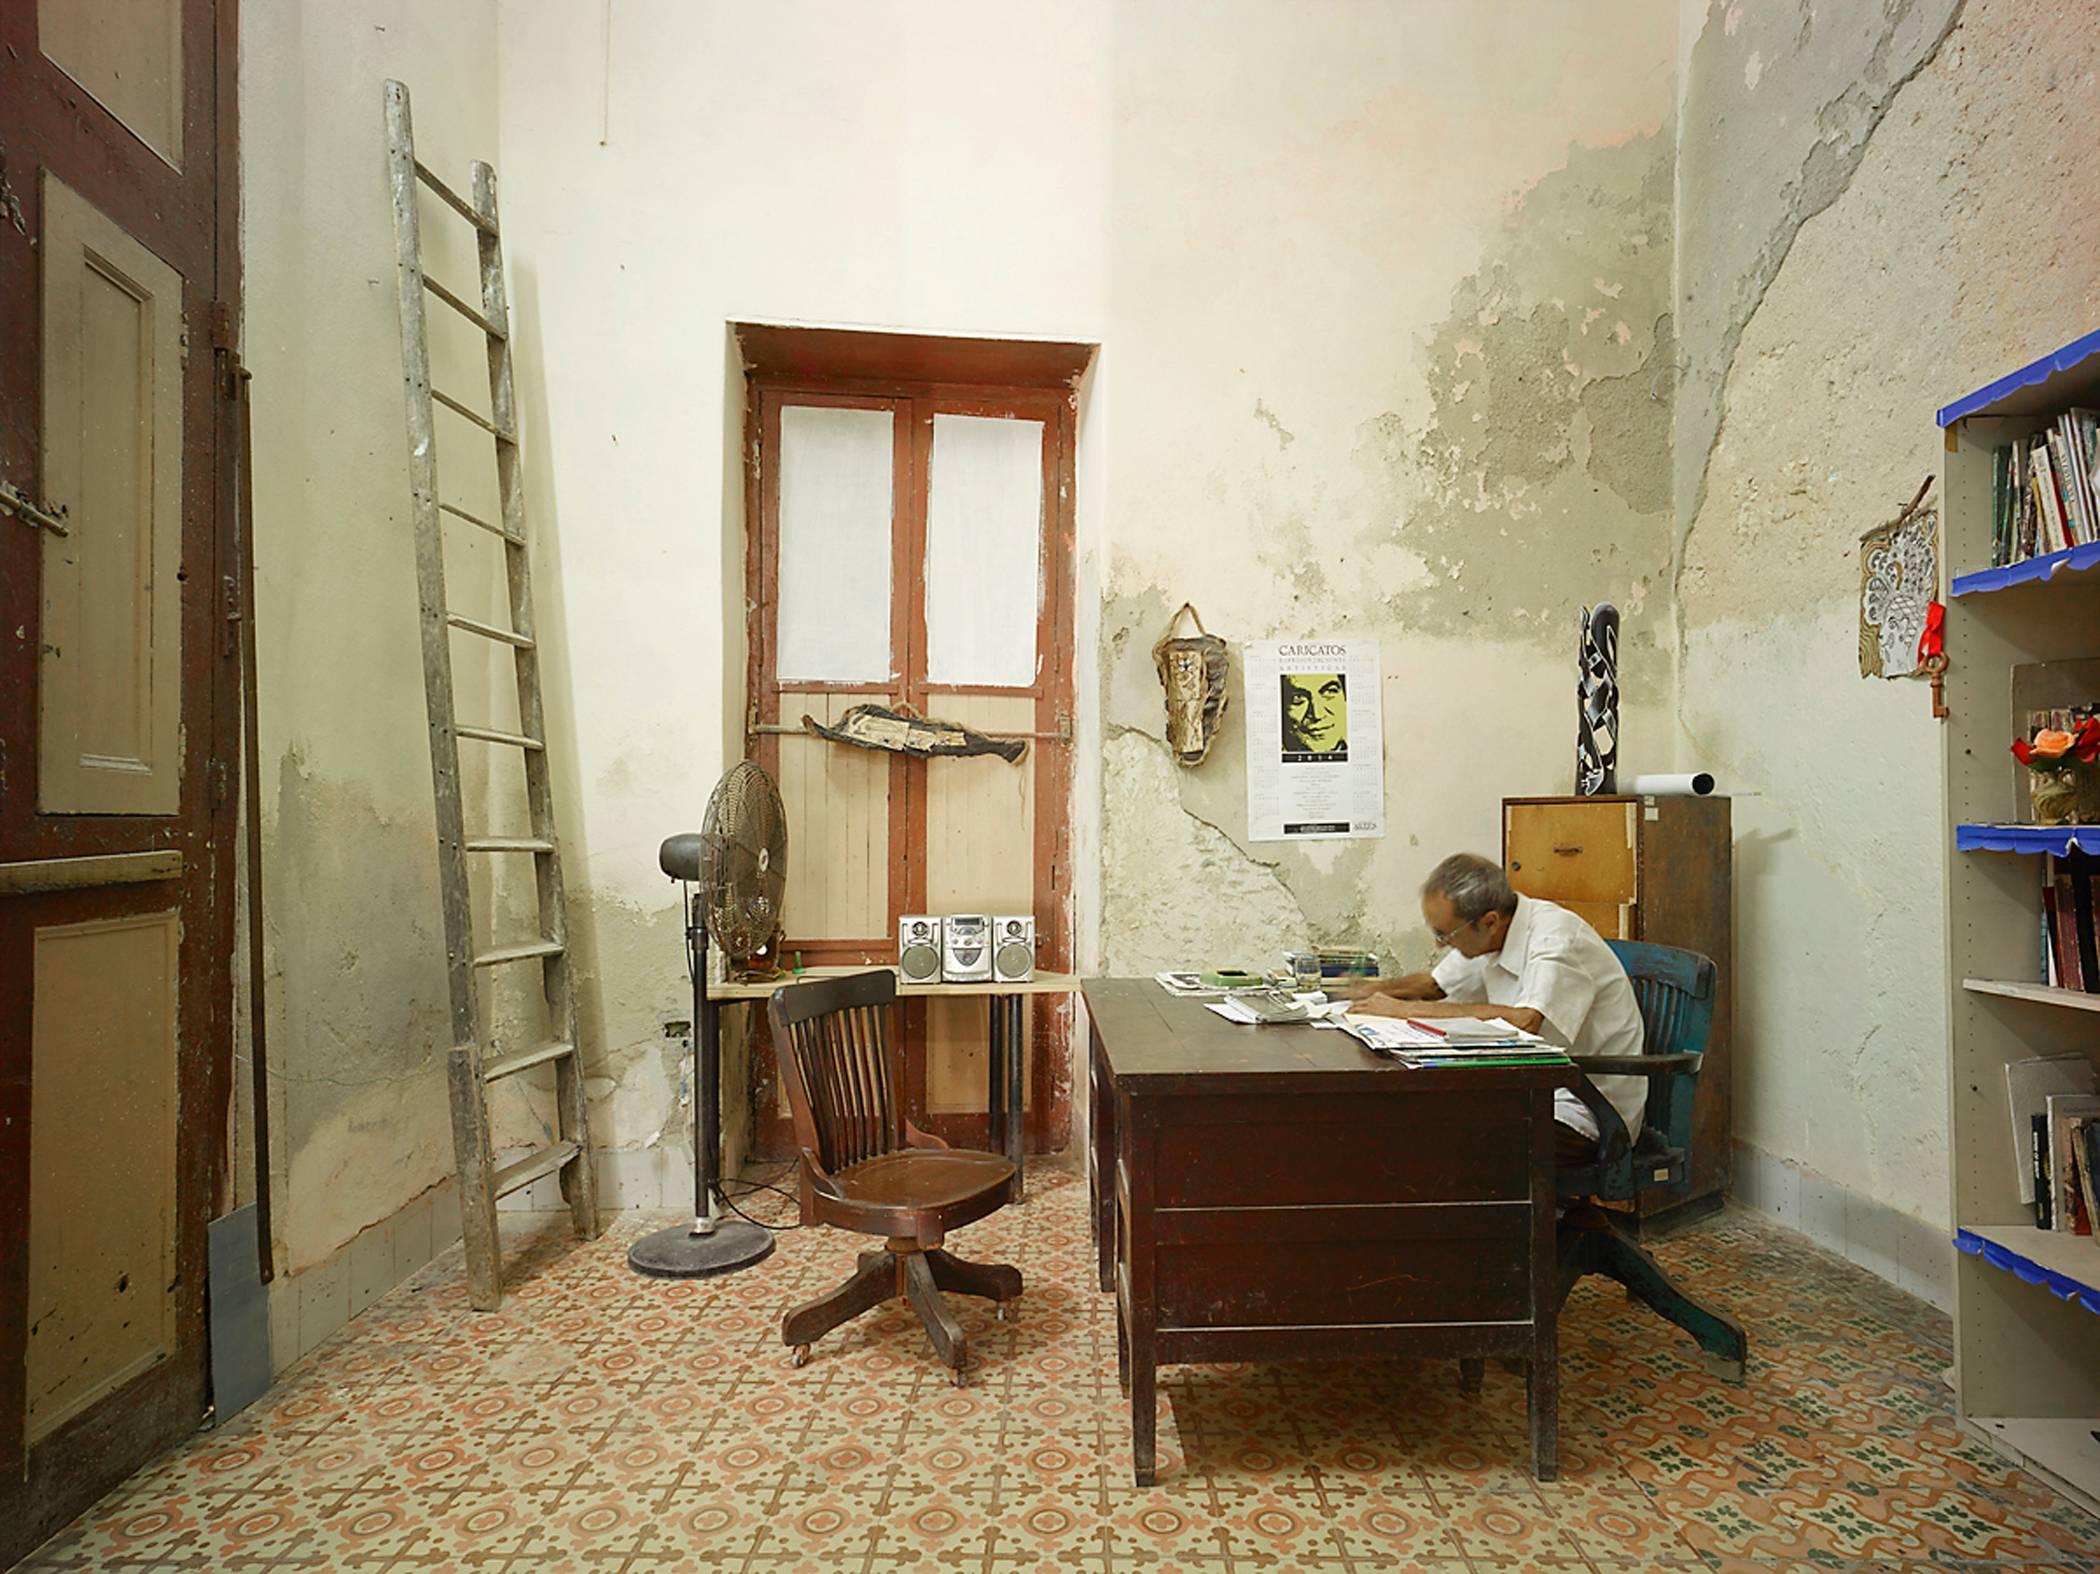 Office, Havana, Cuba, 2014 - Photograph by David Burdeny